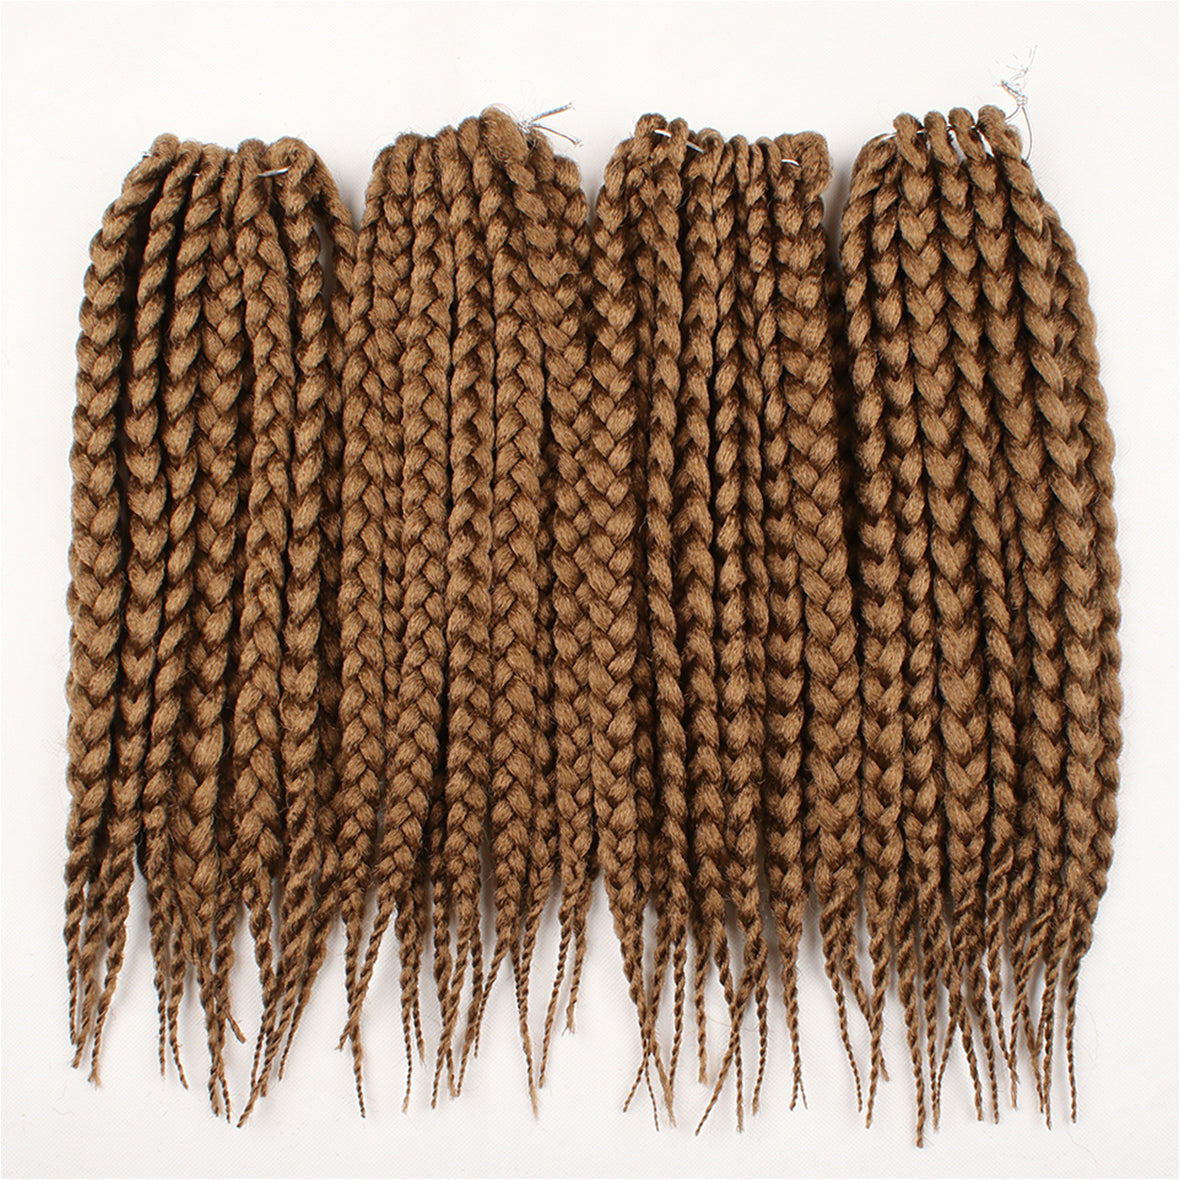 Xtrend Crochet Box Braids Hair 12roots Synthetic Kanekalon Braiding Hair Extensions Black Burgundy Heat Resistant